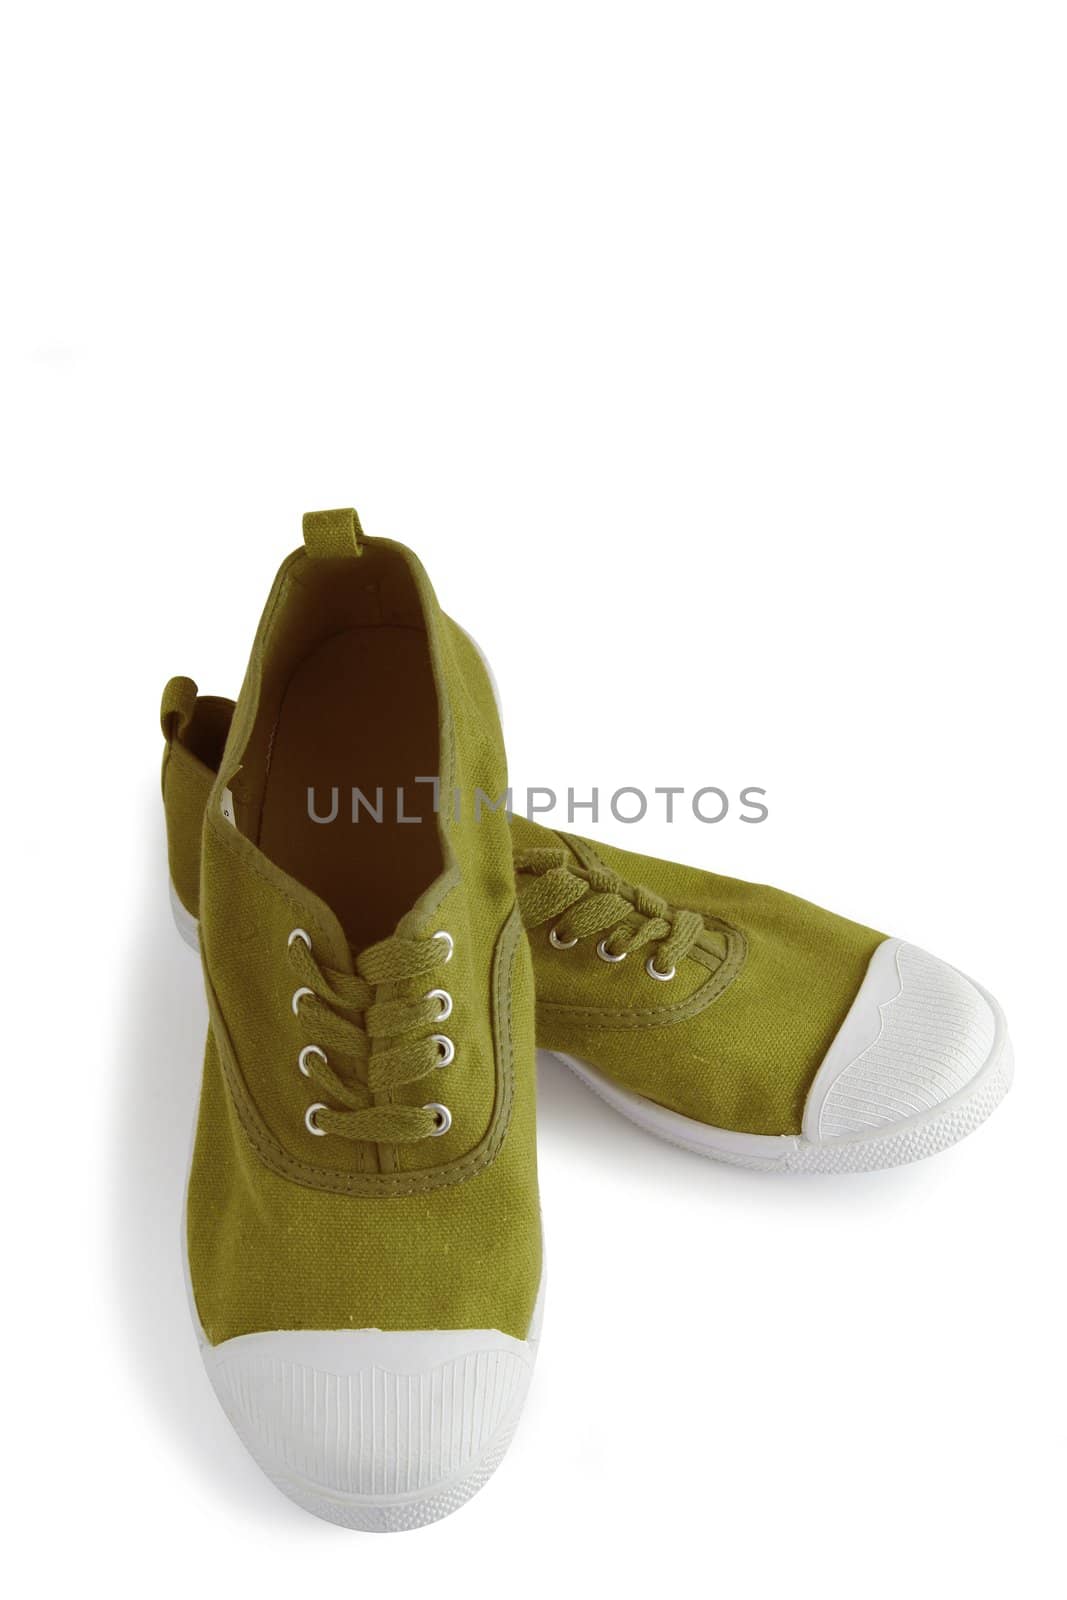 Green sneakers